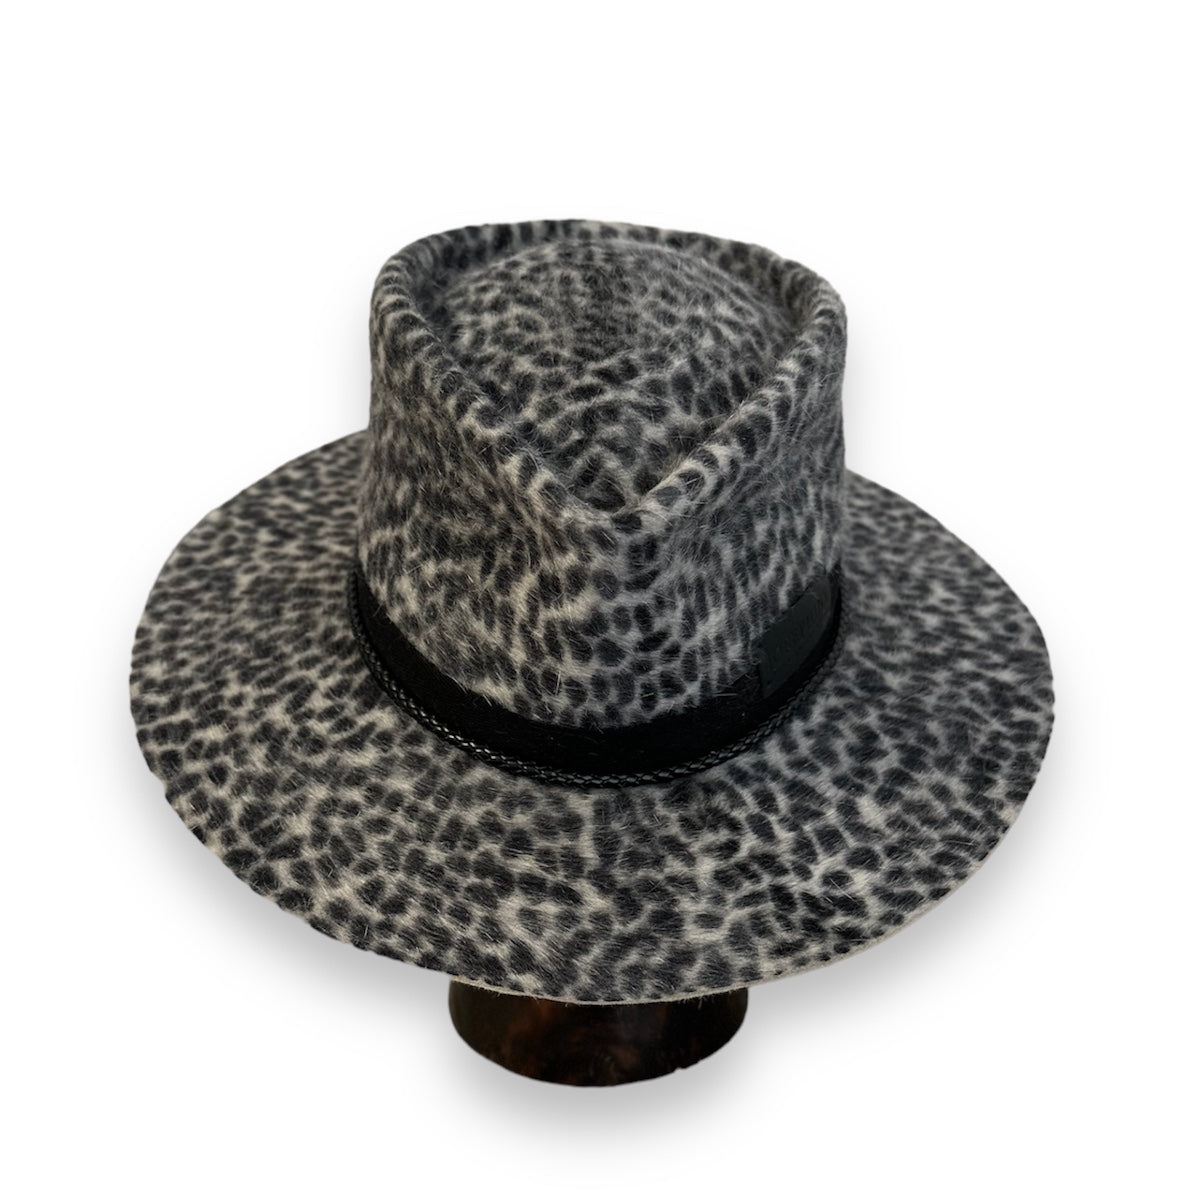 SIBERIAN LEOPARD hat